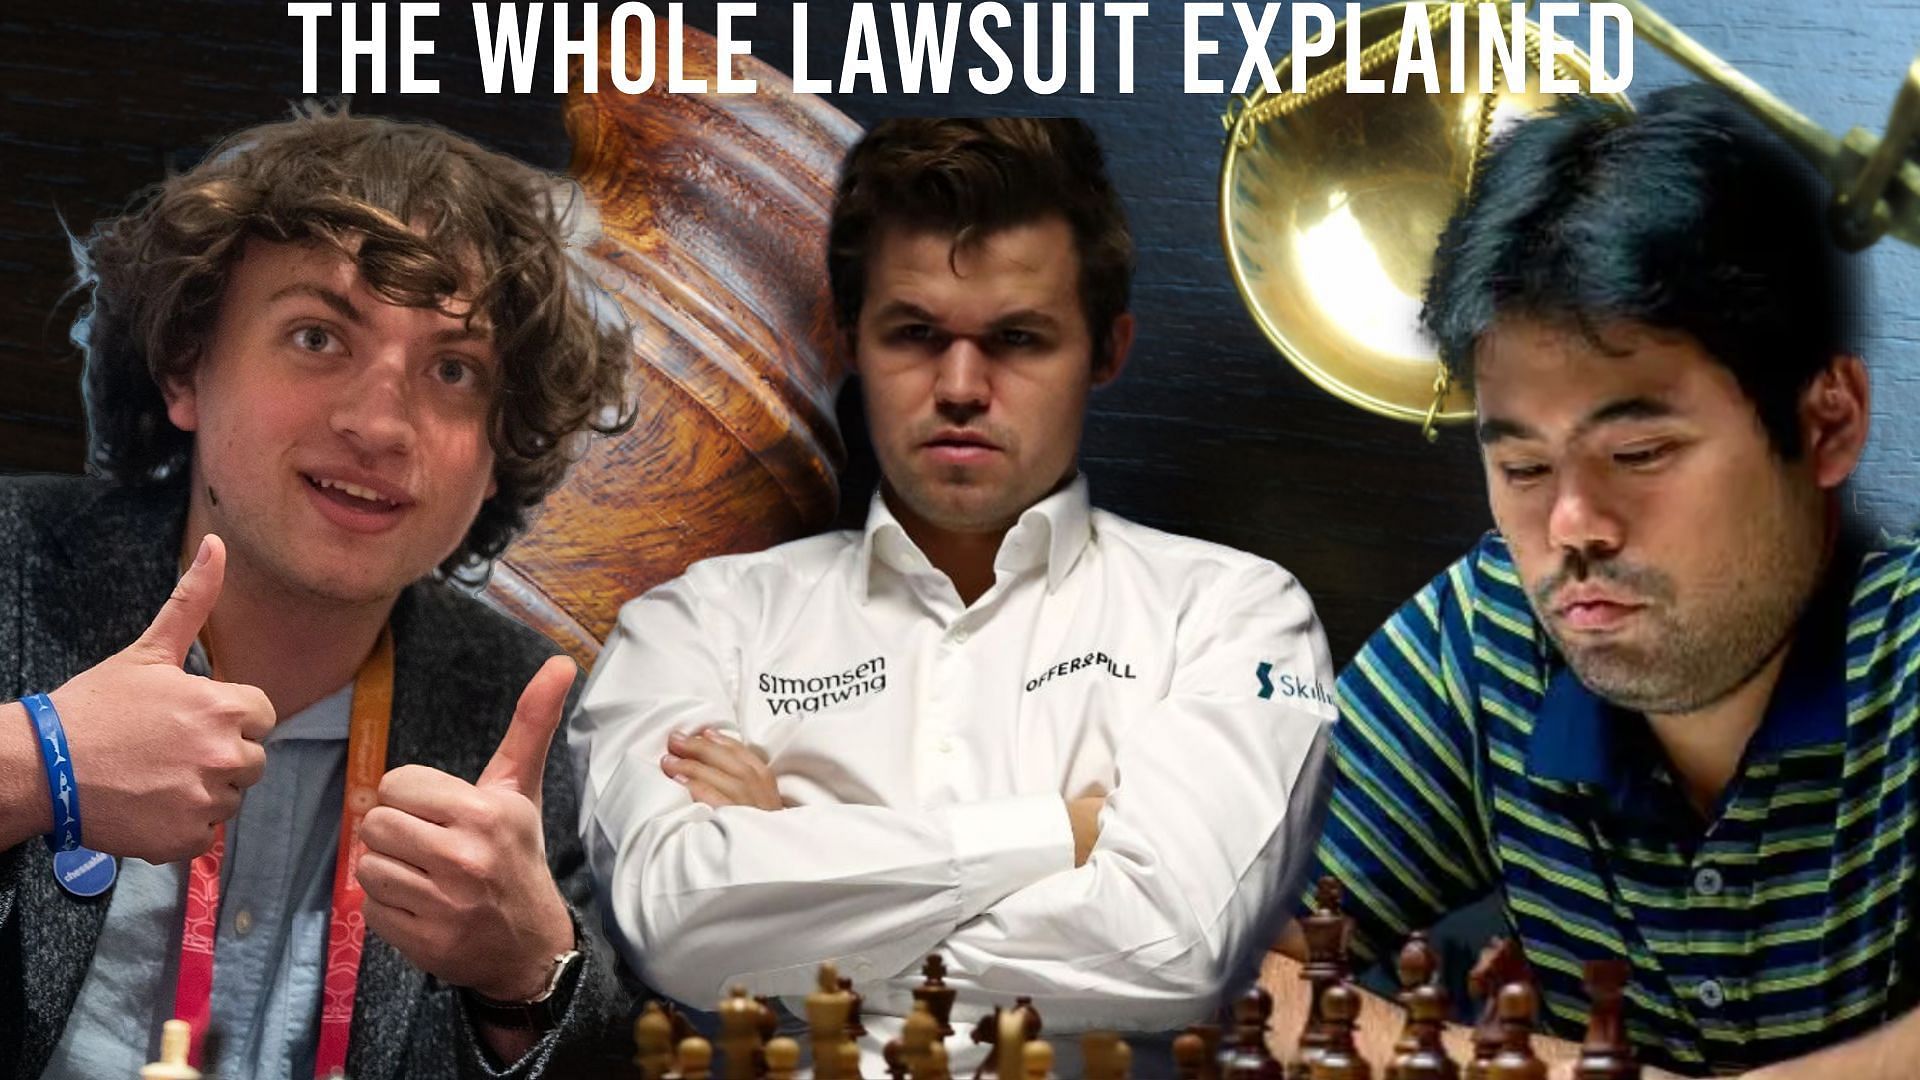 Carlsen–Niemann controversy - Wikipedia